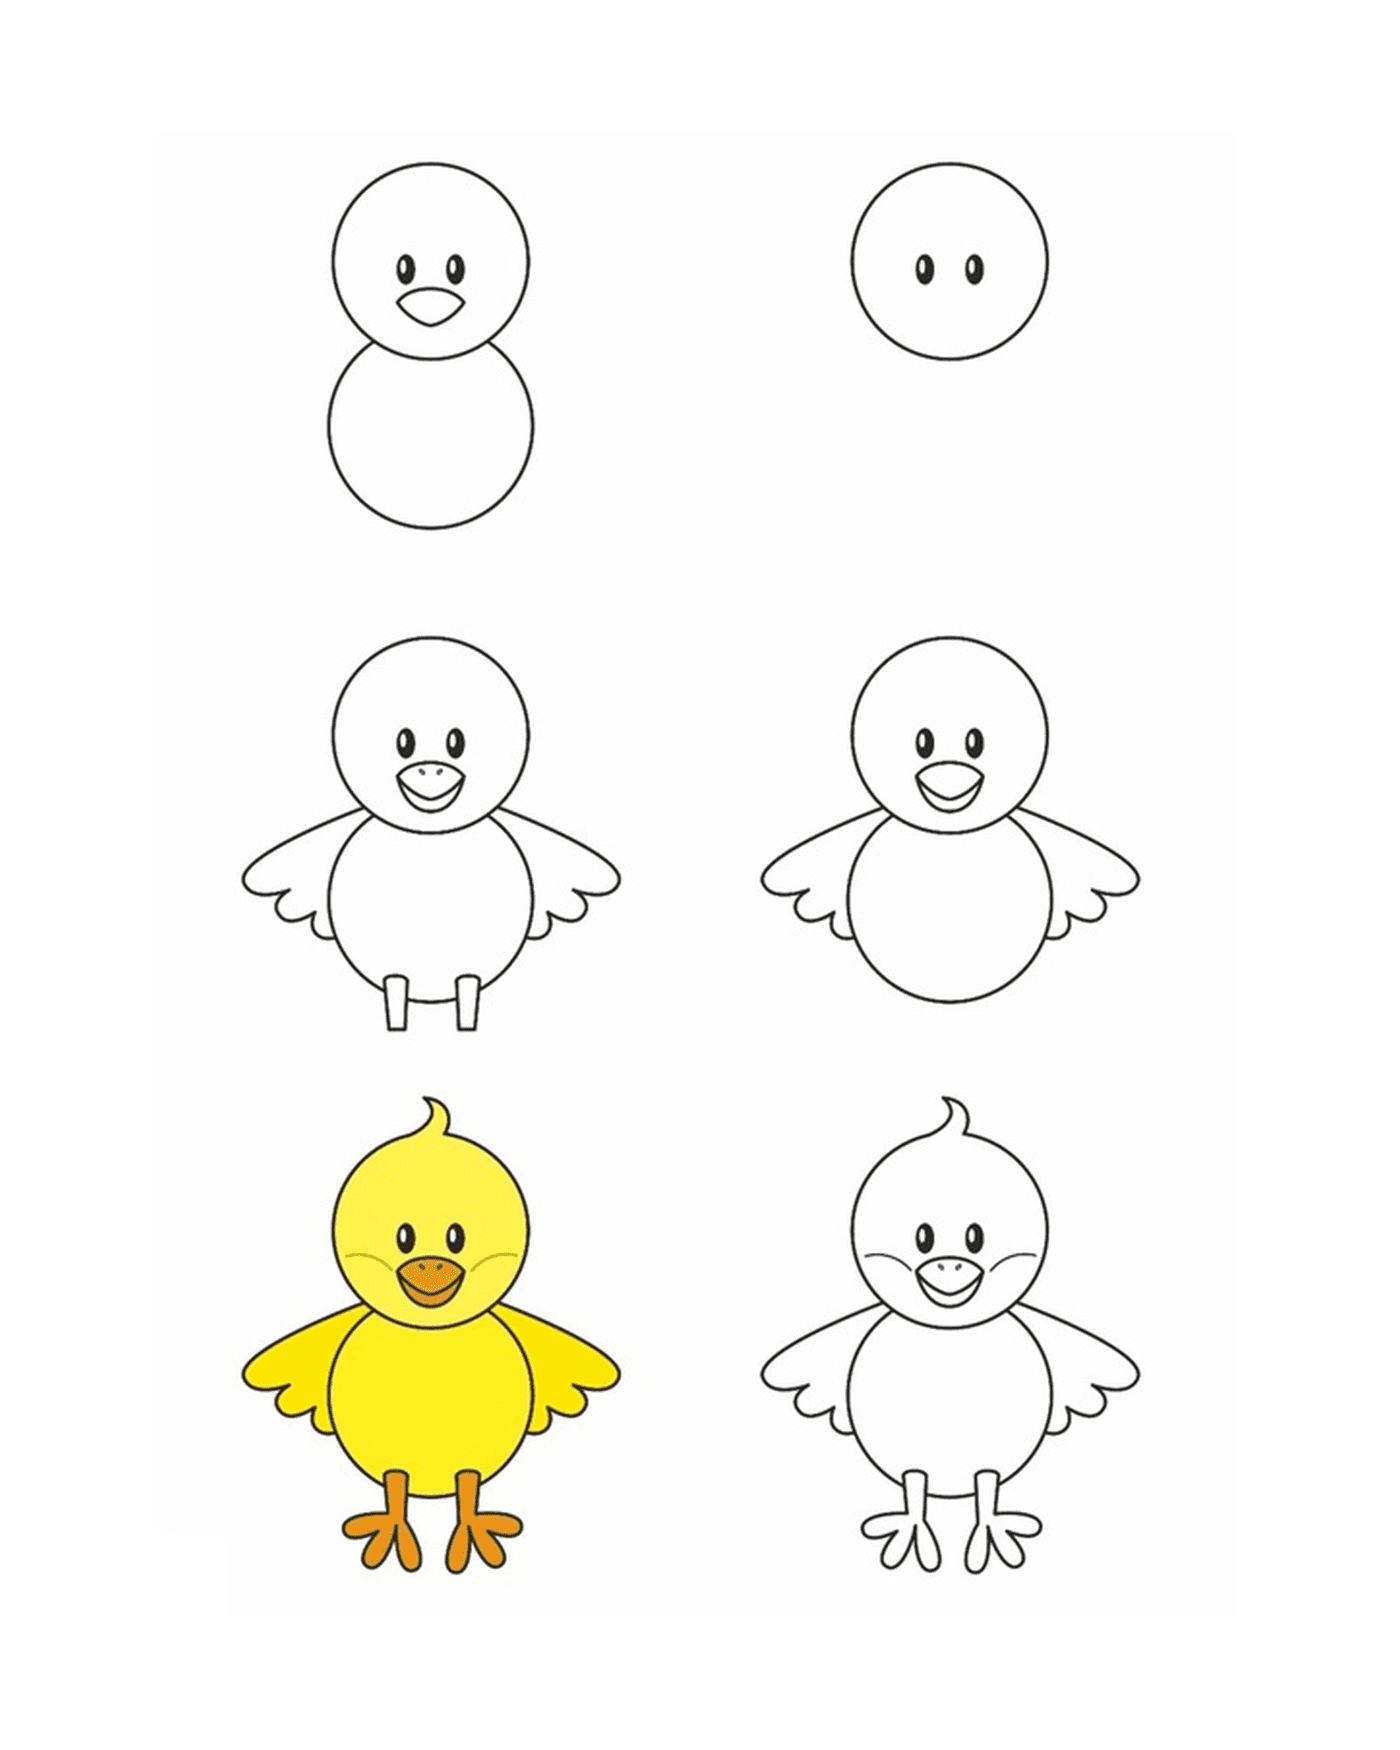  Cómo dibujar un polluelo 